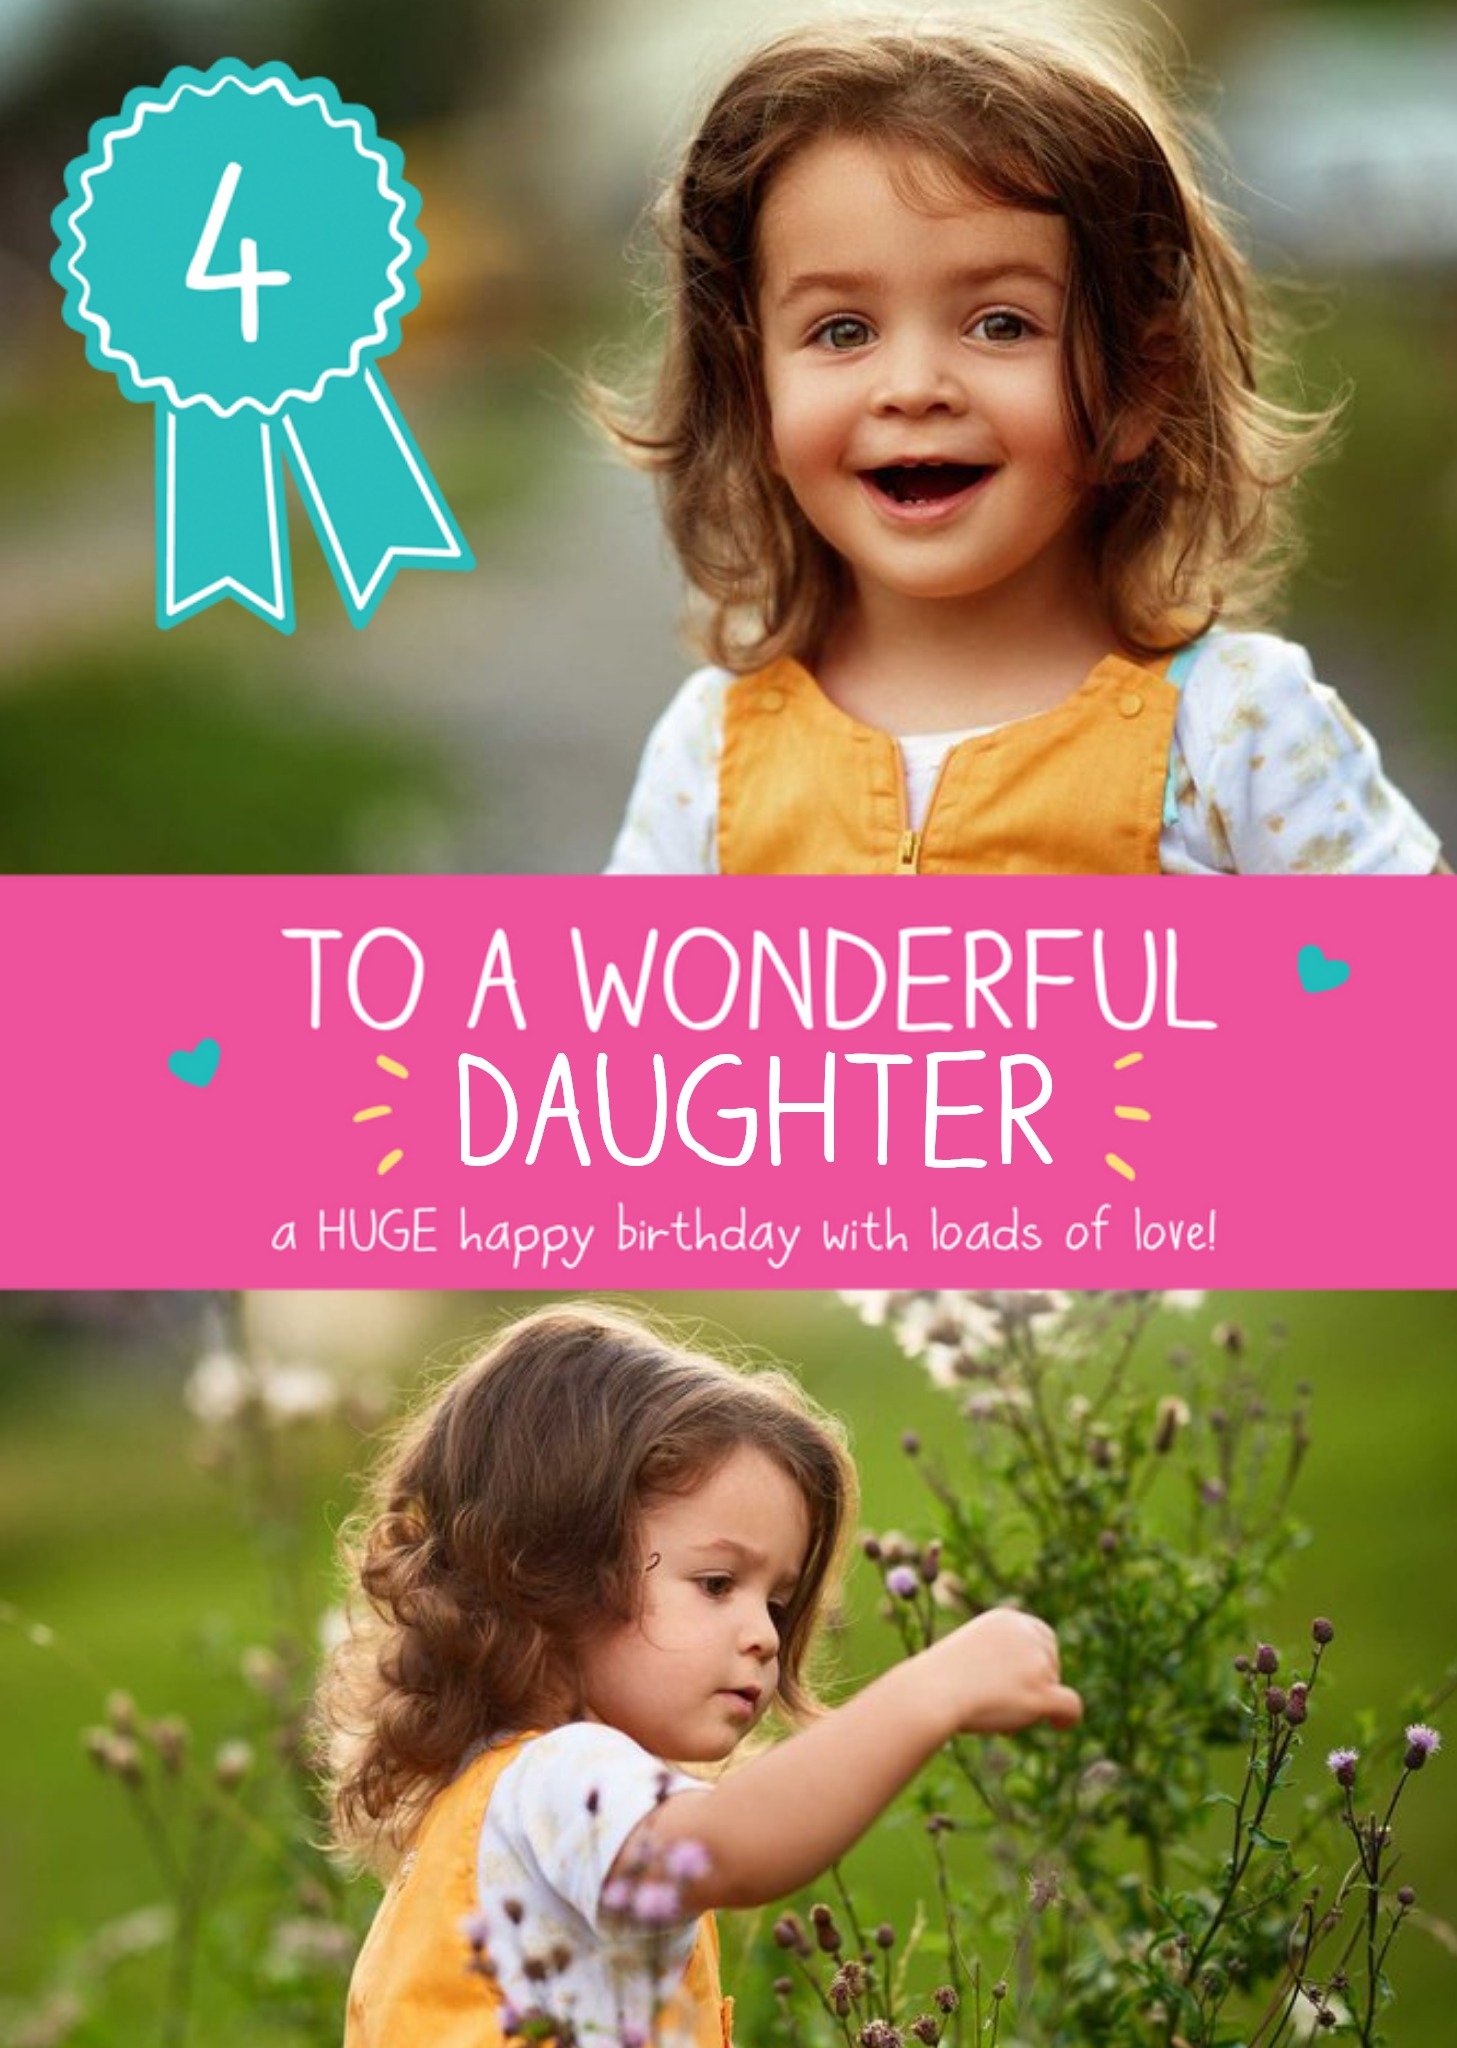 Happy Jackson Wonderful Daughter Pink Photo Upload 4th Birthday Card Ecard